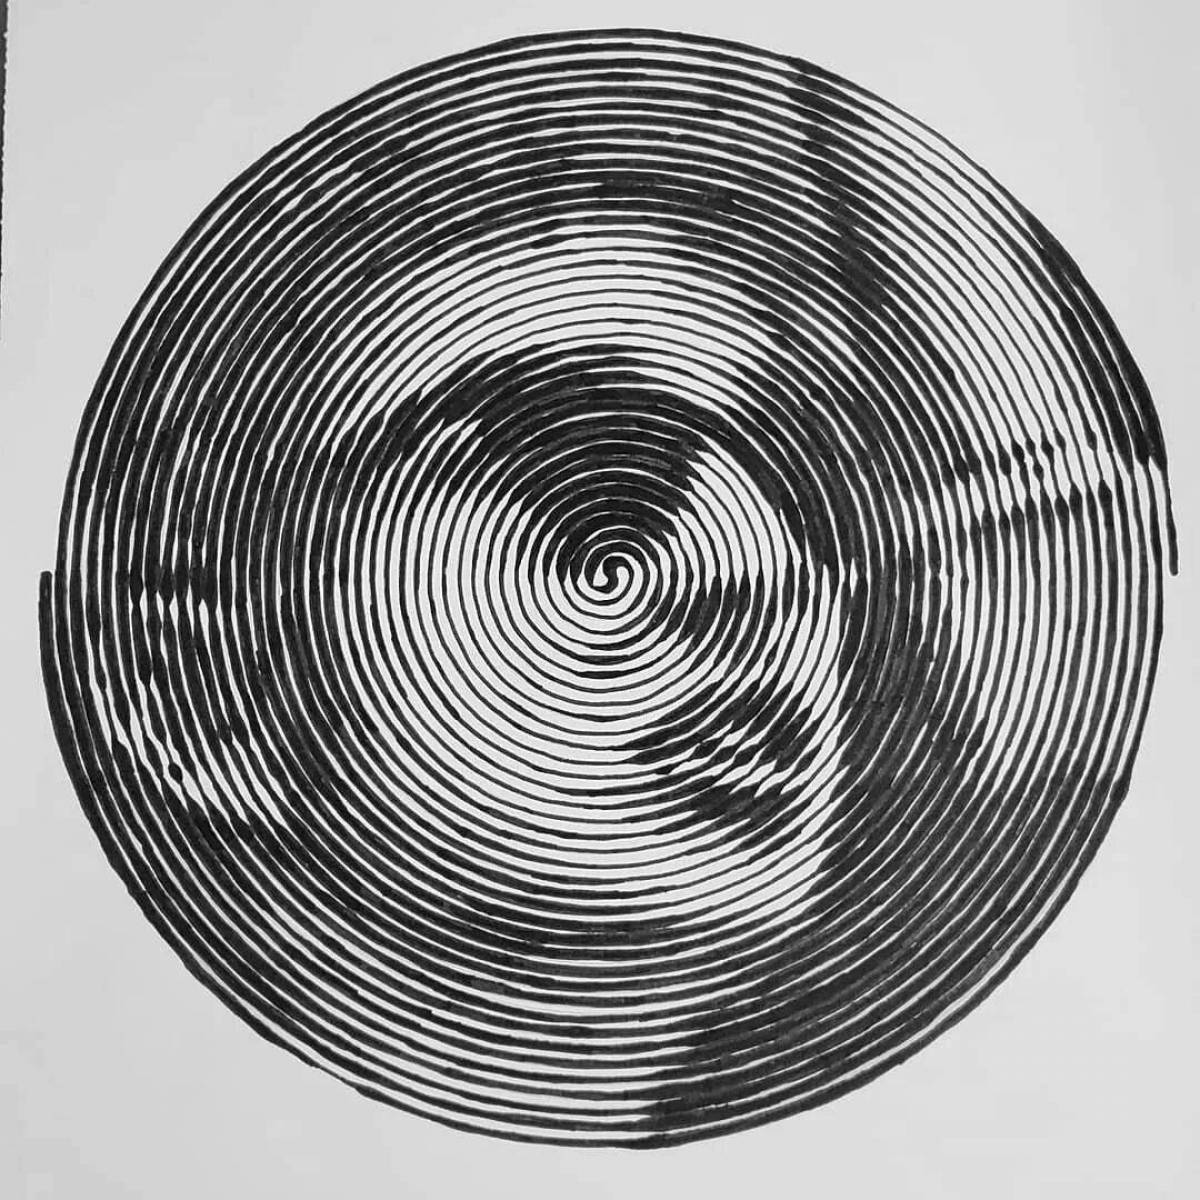 Coloring fantasy circular spiral